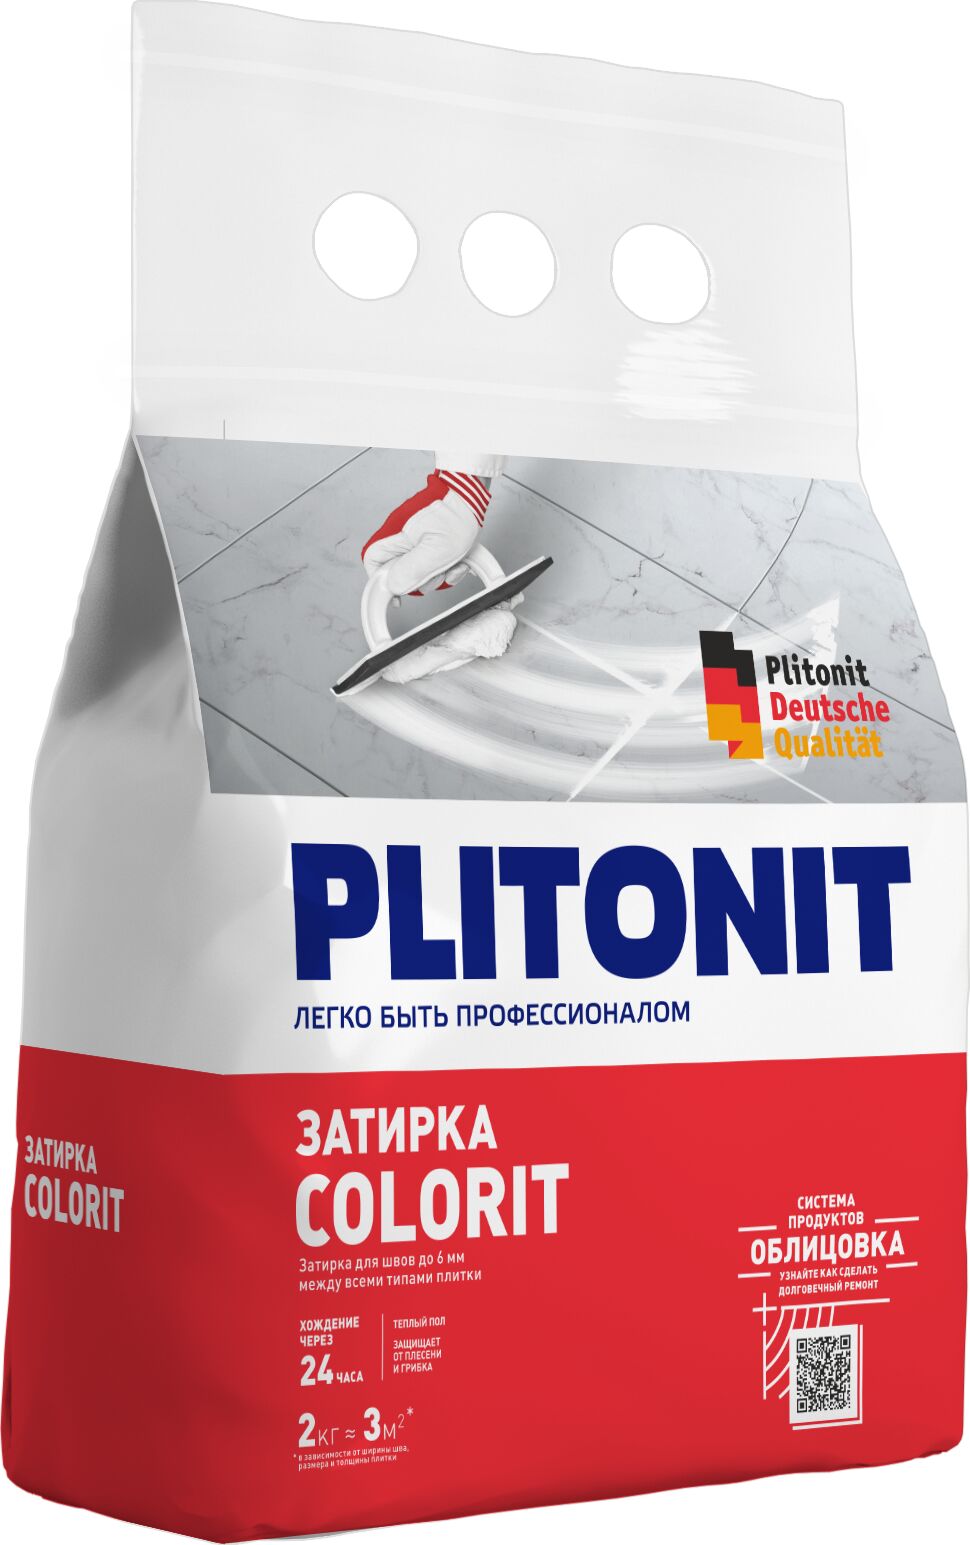 PLITONIT Colorit затирка между всеми типами плитки (1,5-6 мм) БЕЖЕВАЯ -2 , PLITONIT Colorit затирка между всеми типами плитки (1,5-6 мм) бежевая -2 